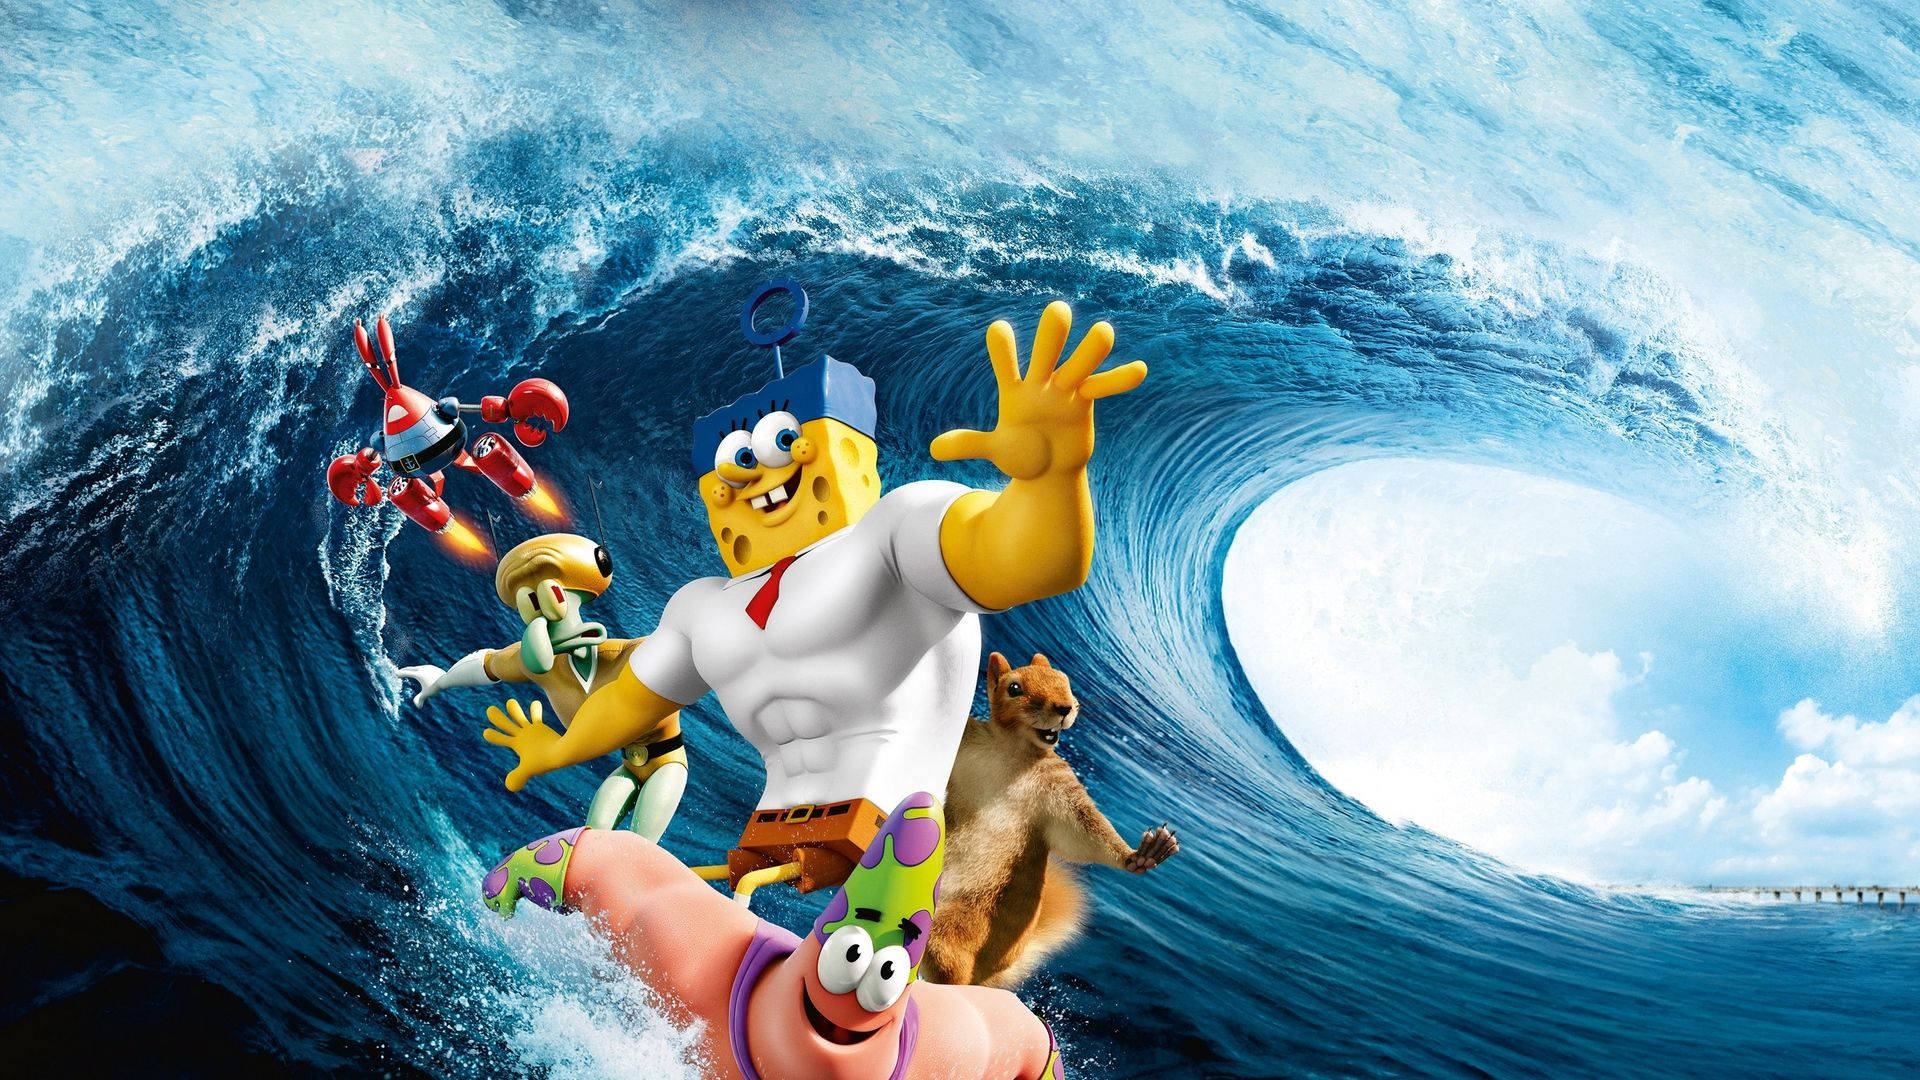 Mr. Krabs in Exciting Scene from Spongebob the Movie Wallpaper